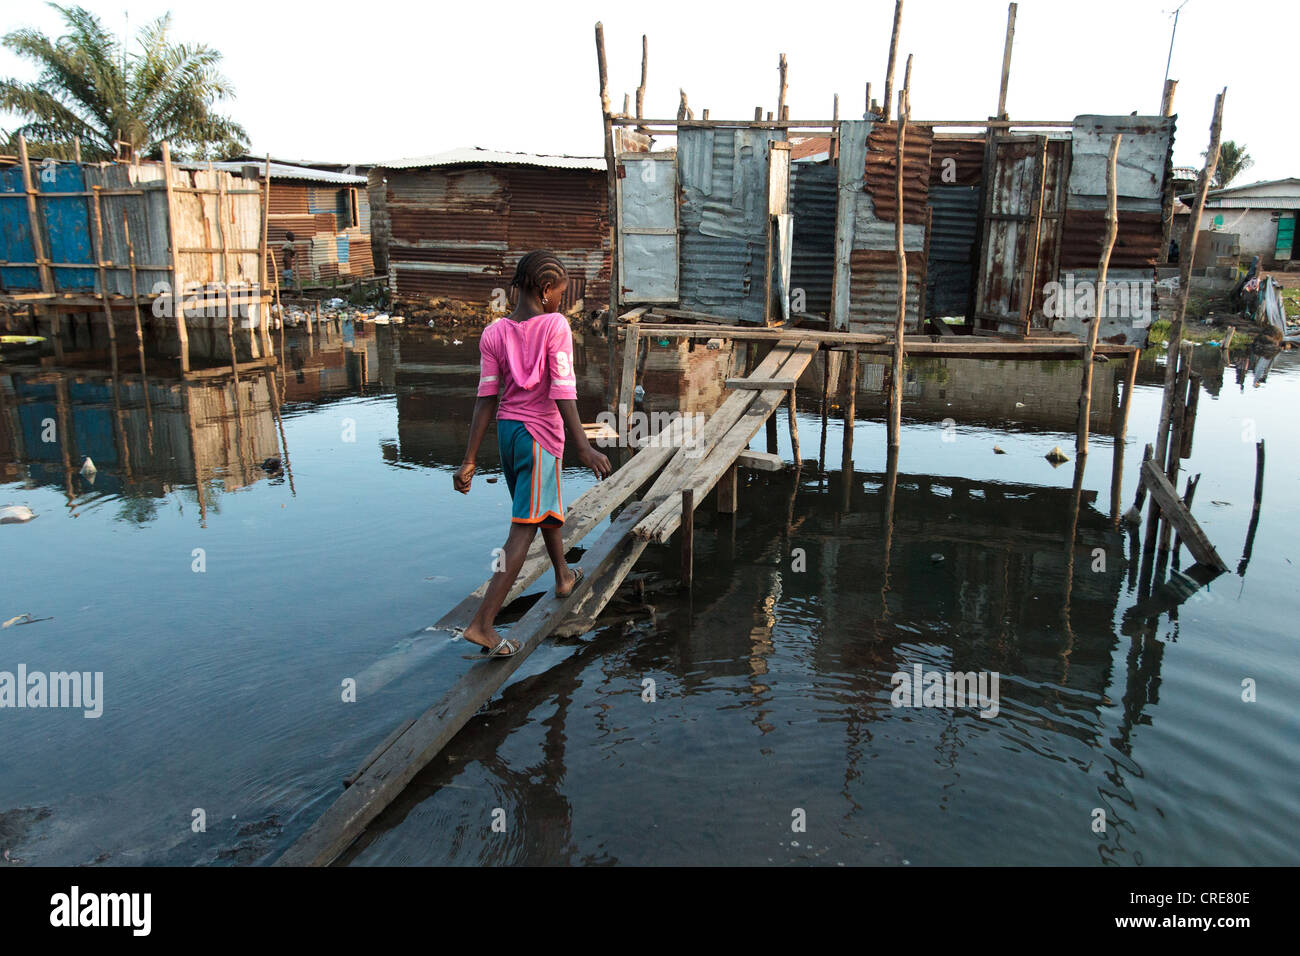 A girl walks up to a latrine on stilts in the Clara town slum in Monrovia, Montserrado county, Liberia on Thursday April 5, 2012 Stock Photo